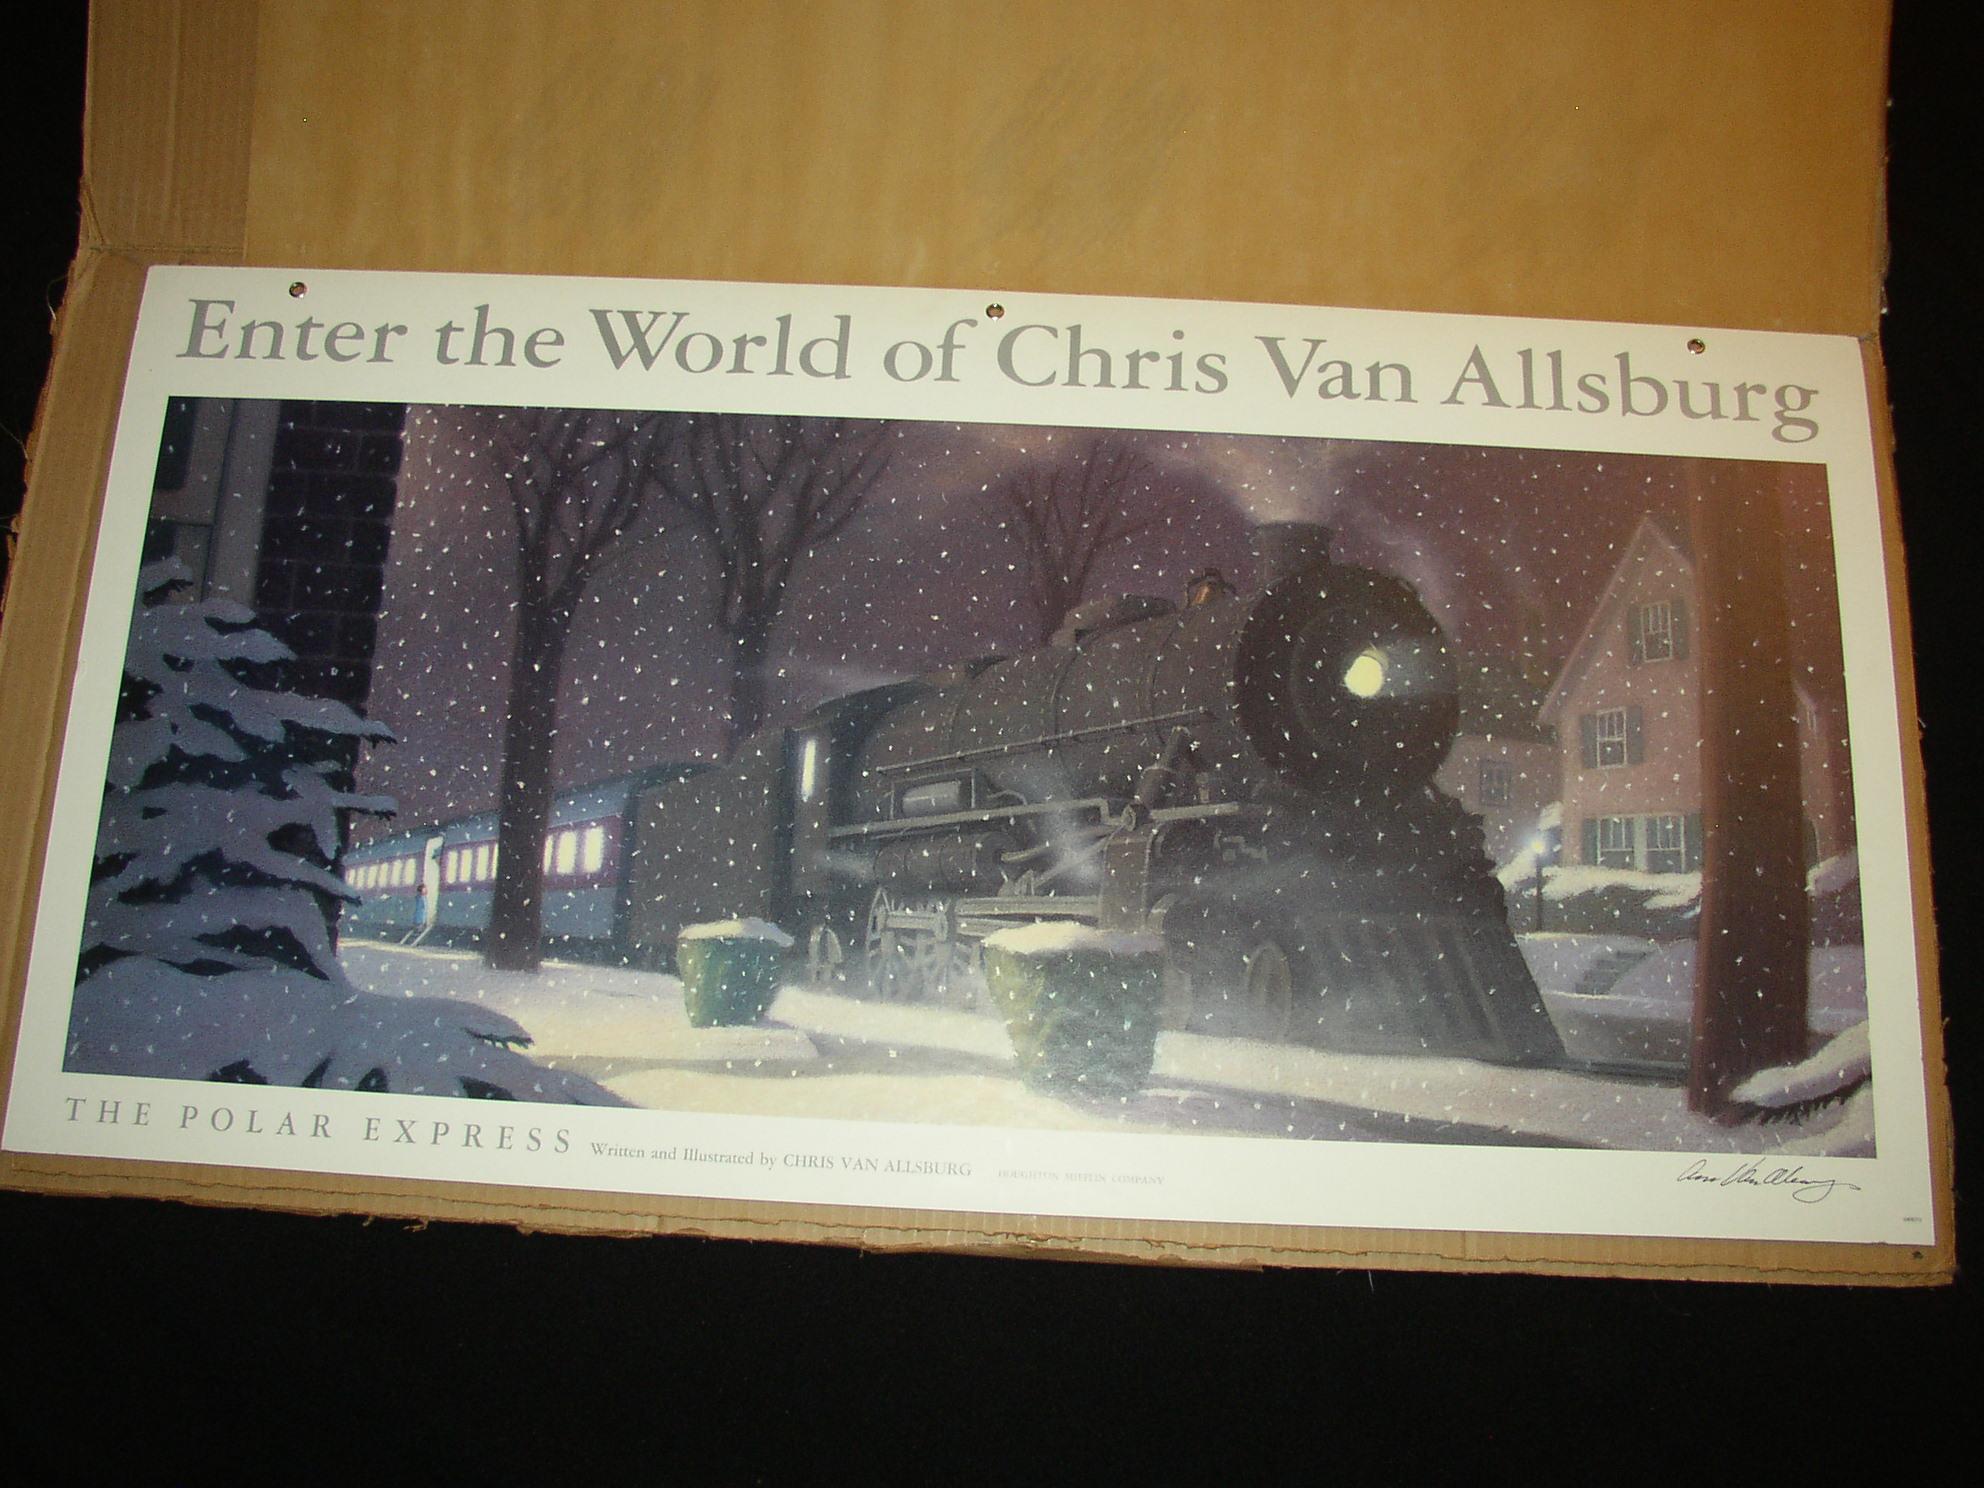 chris van allsburg polar express illustrations